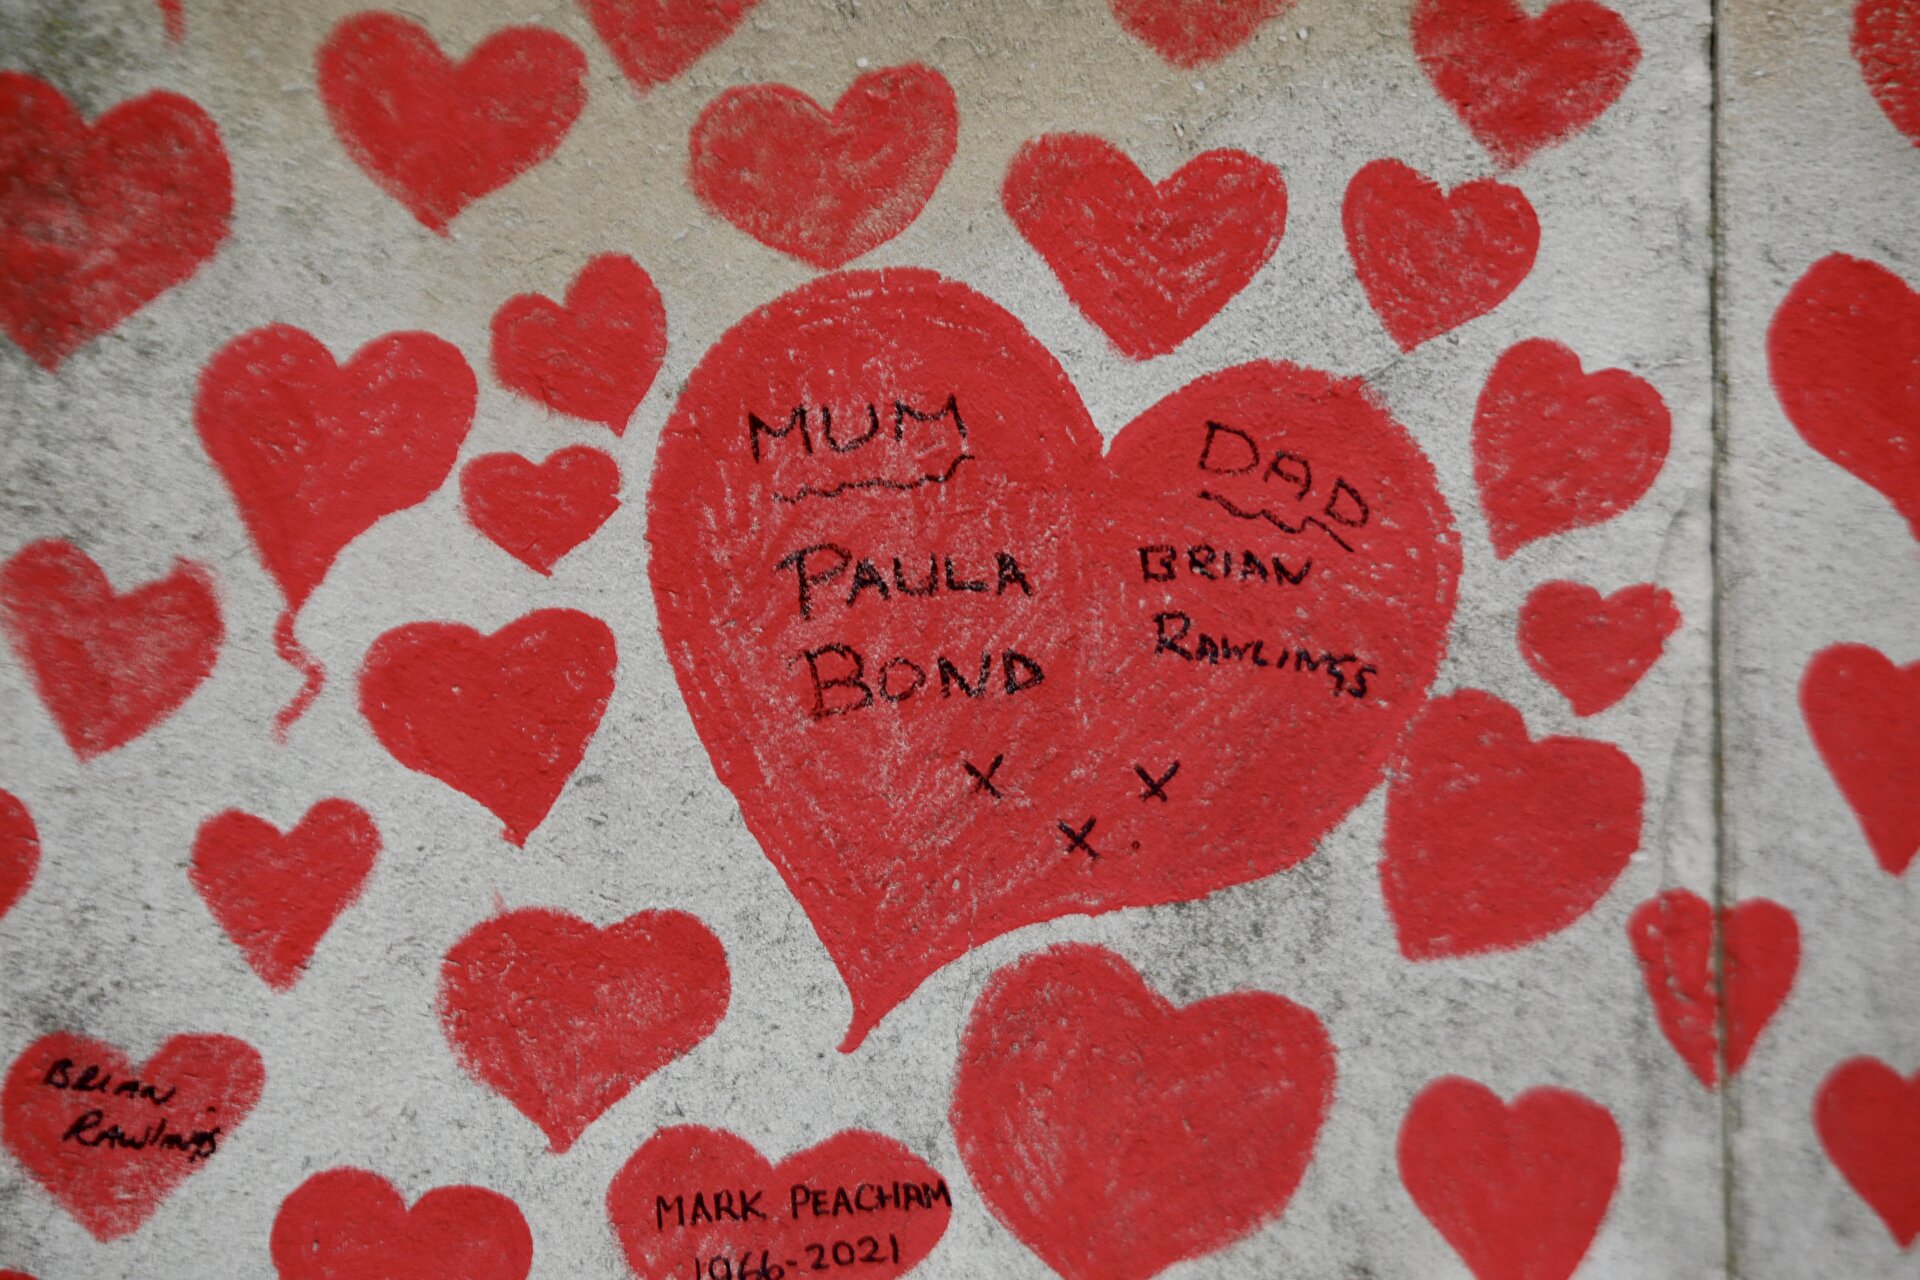 National Covid Memorial Wall in London honors pandemic victims